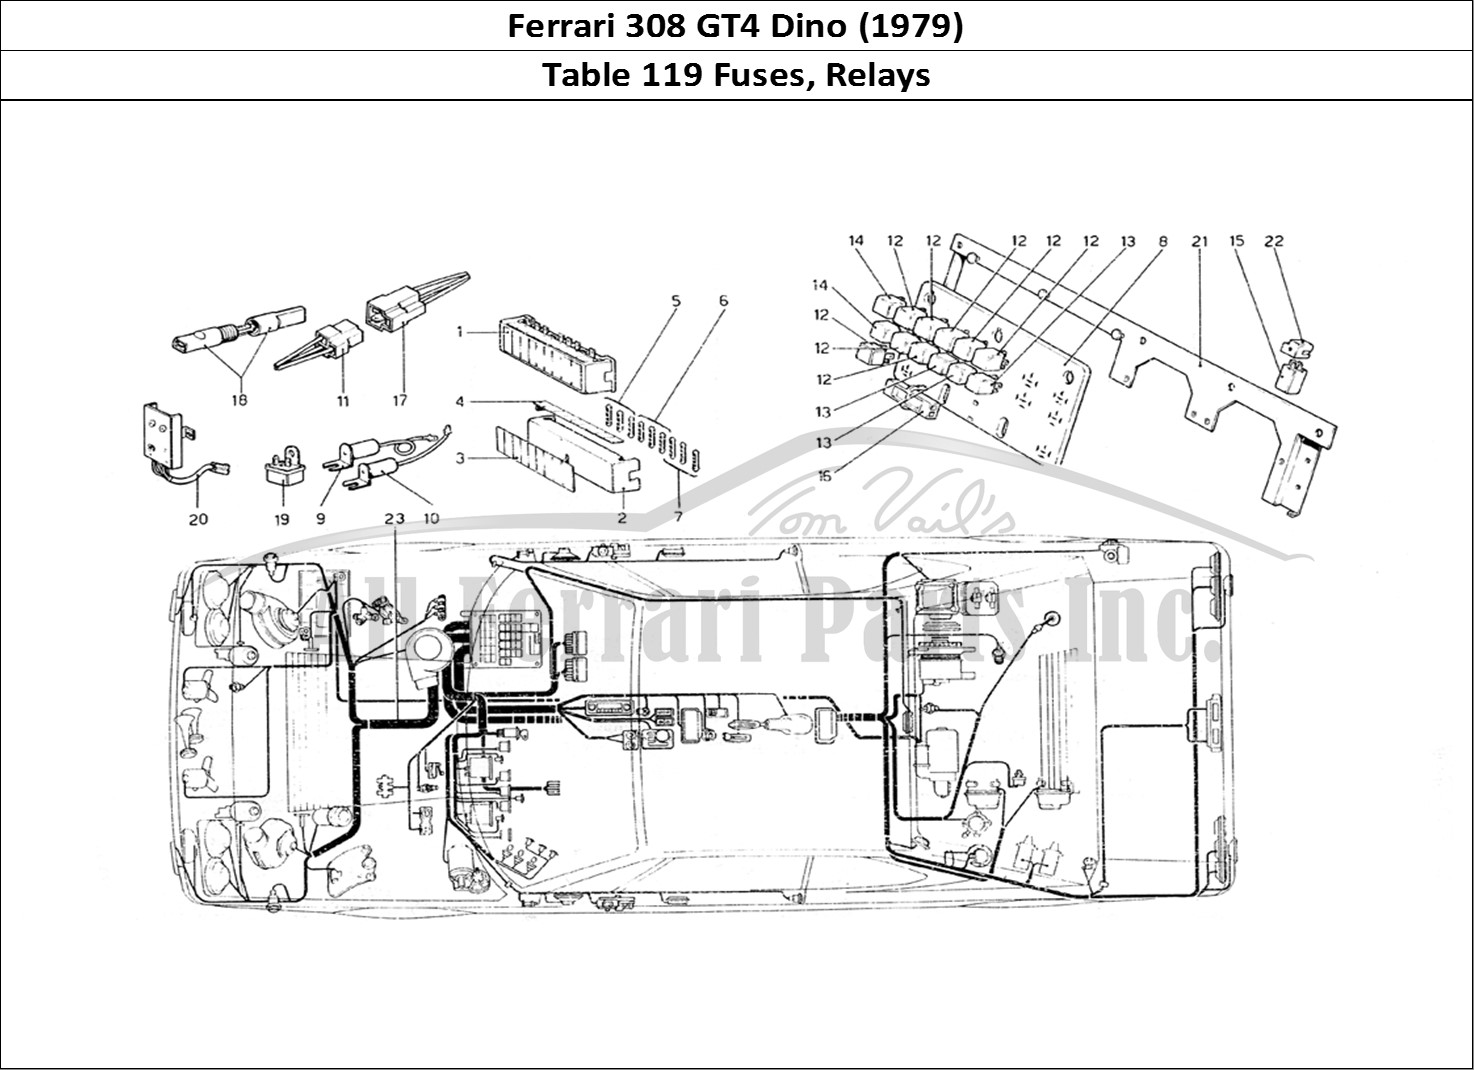 Ferrari Parts Ferrari 308 GT4 Dino (1979) Page 119 Fuses and Relays